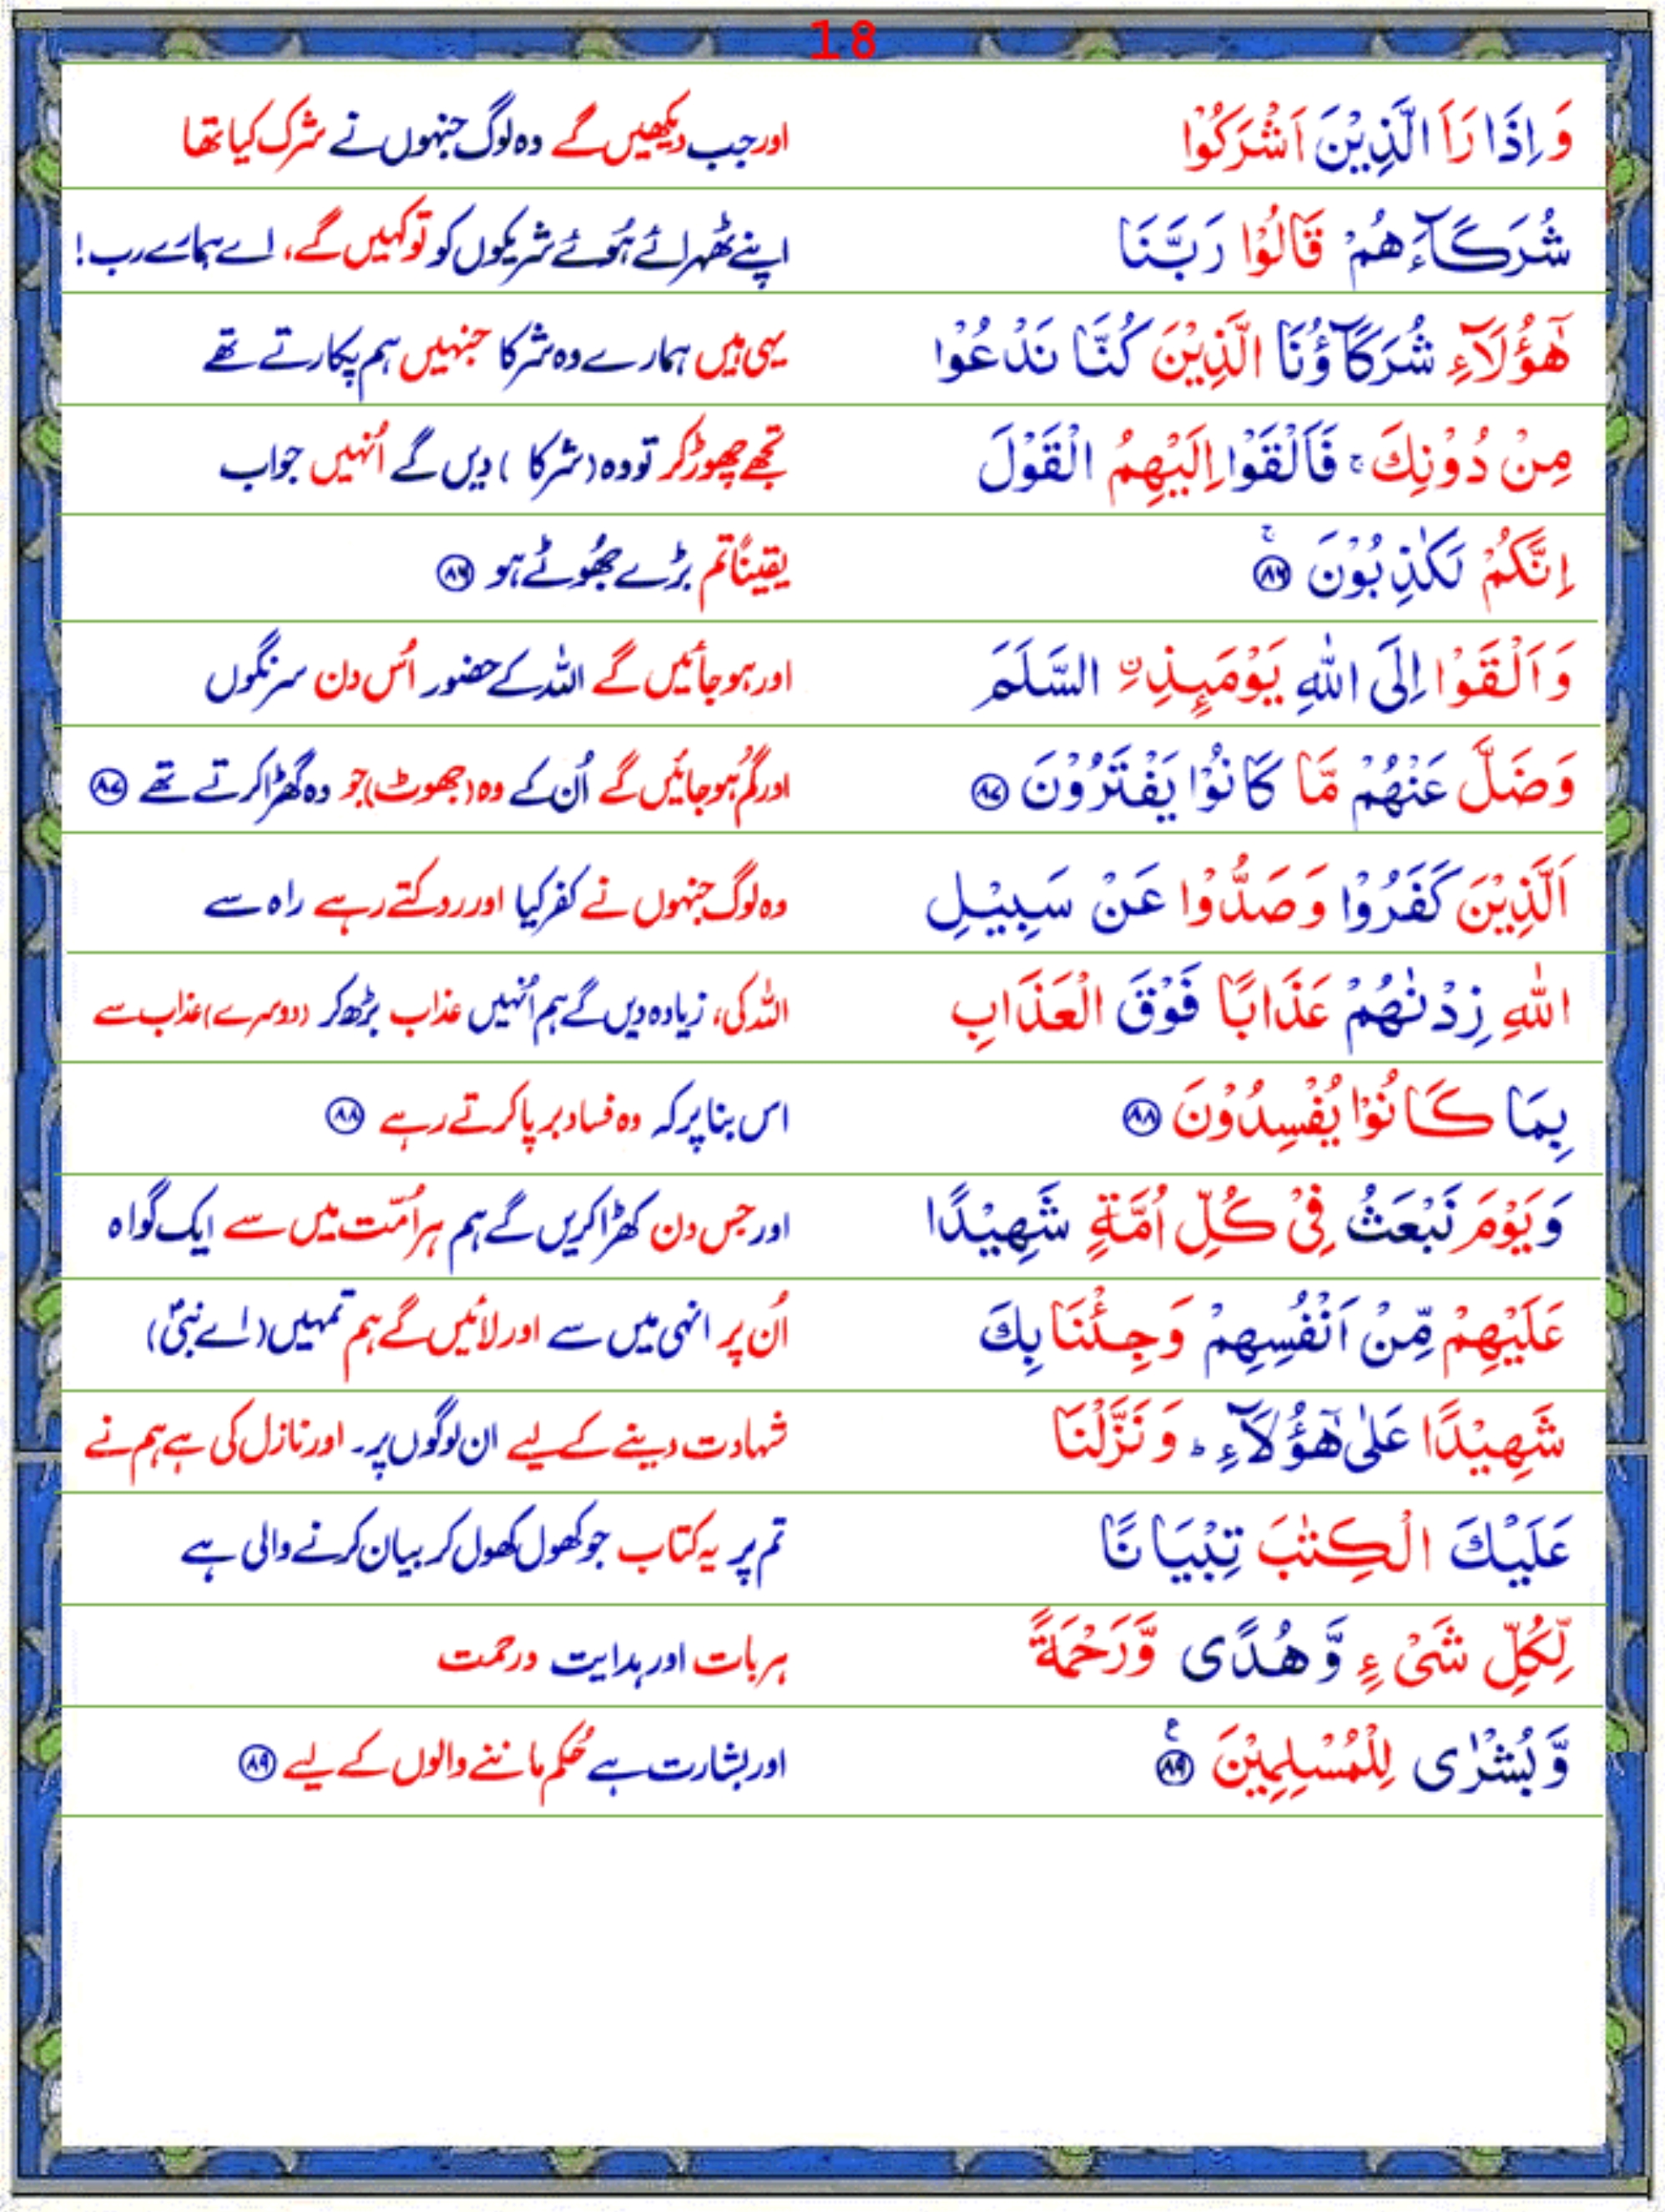 Surah Al Nahl Urdu1 Page 2 Of 4 Quran O Sunnat